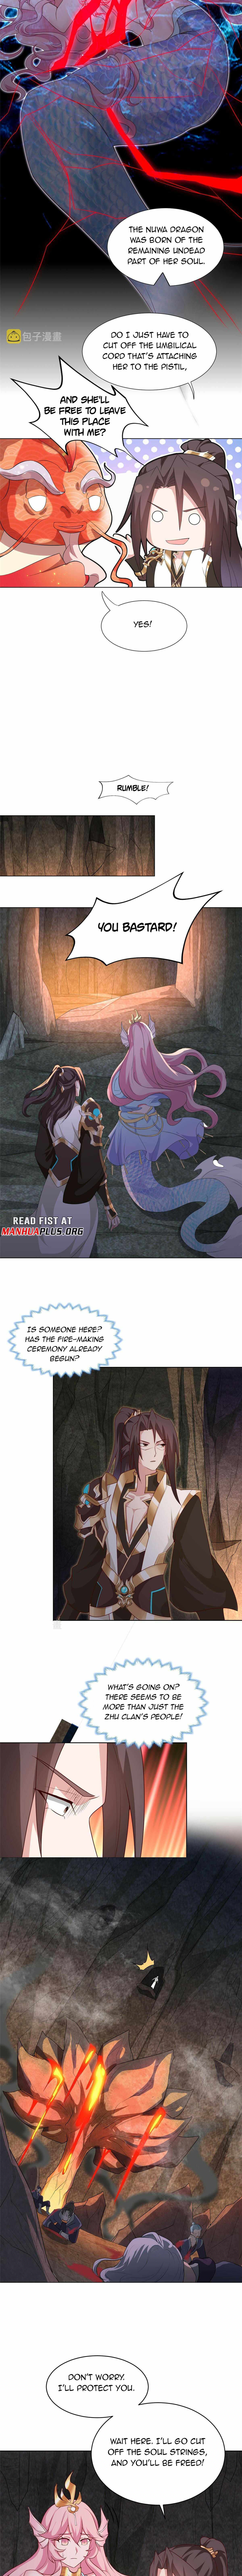 Dragon Master Chapter 245-eng-li - Page 2